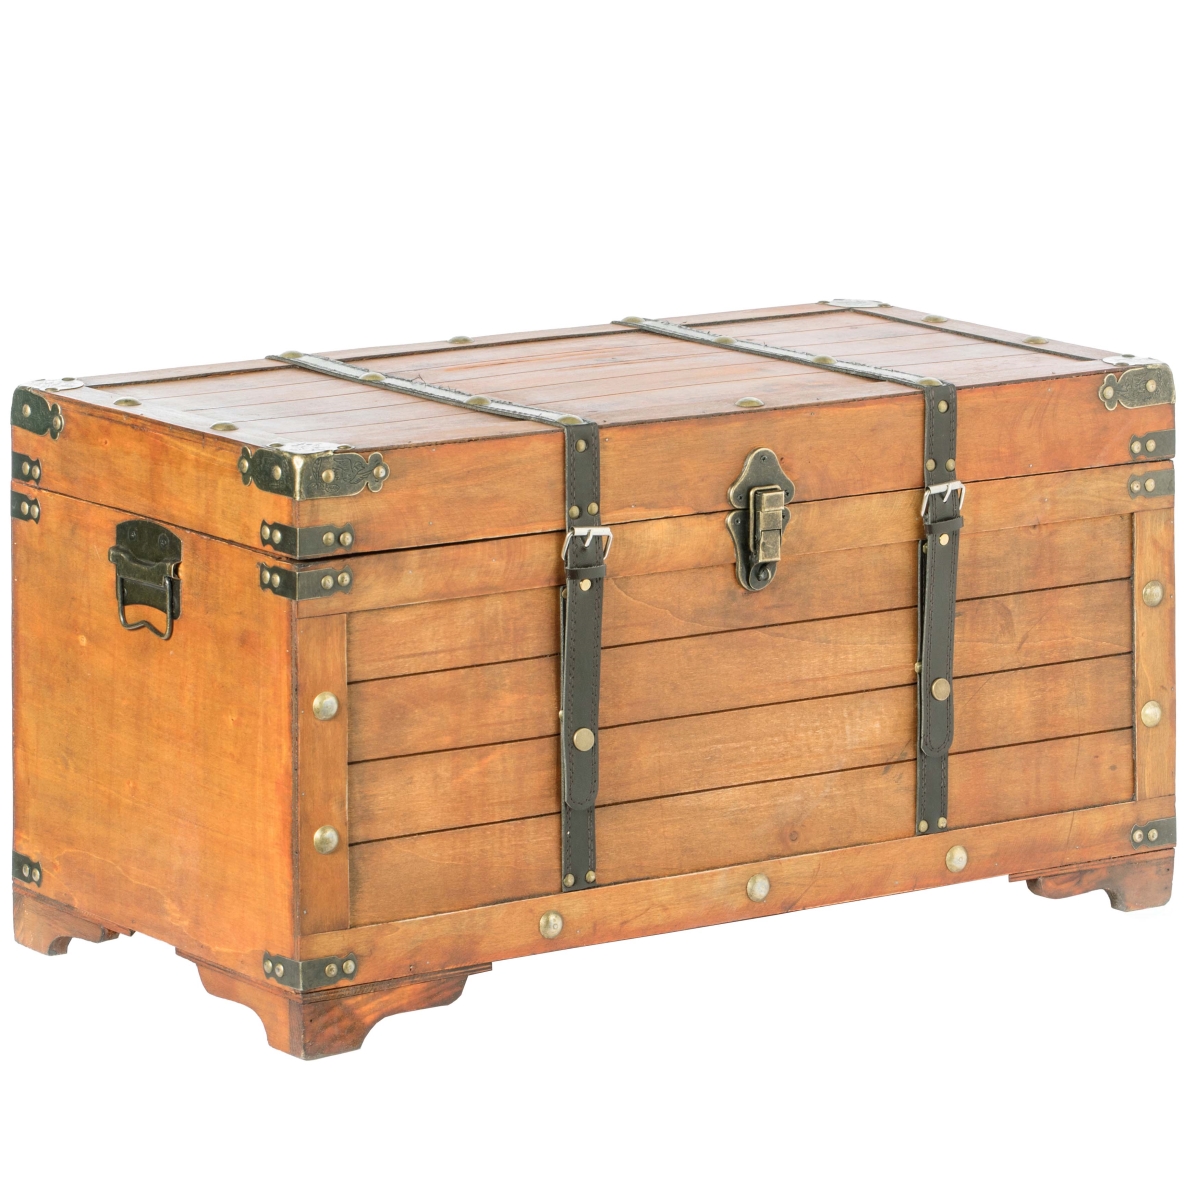 KD Marco de la cama Rustic Wooden Storage Trunk with Lockable Latch&#44; Brown - Large